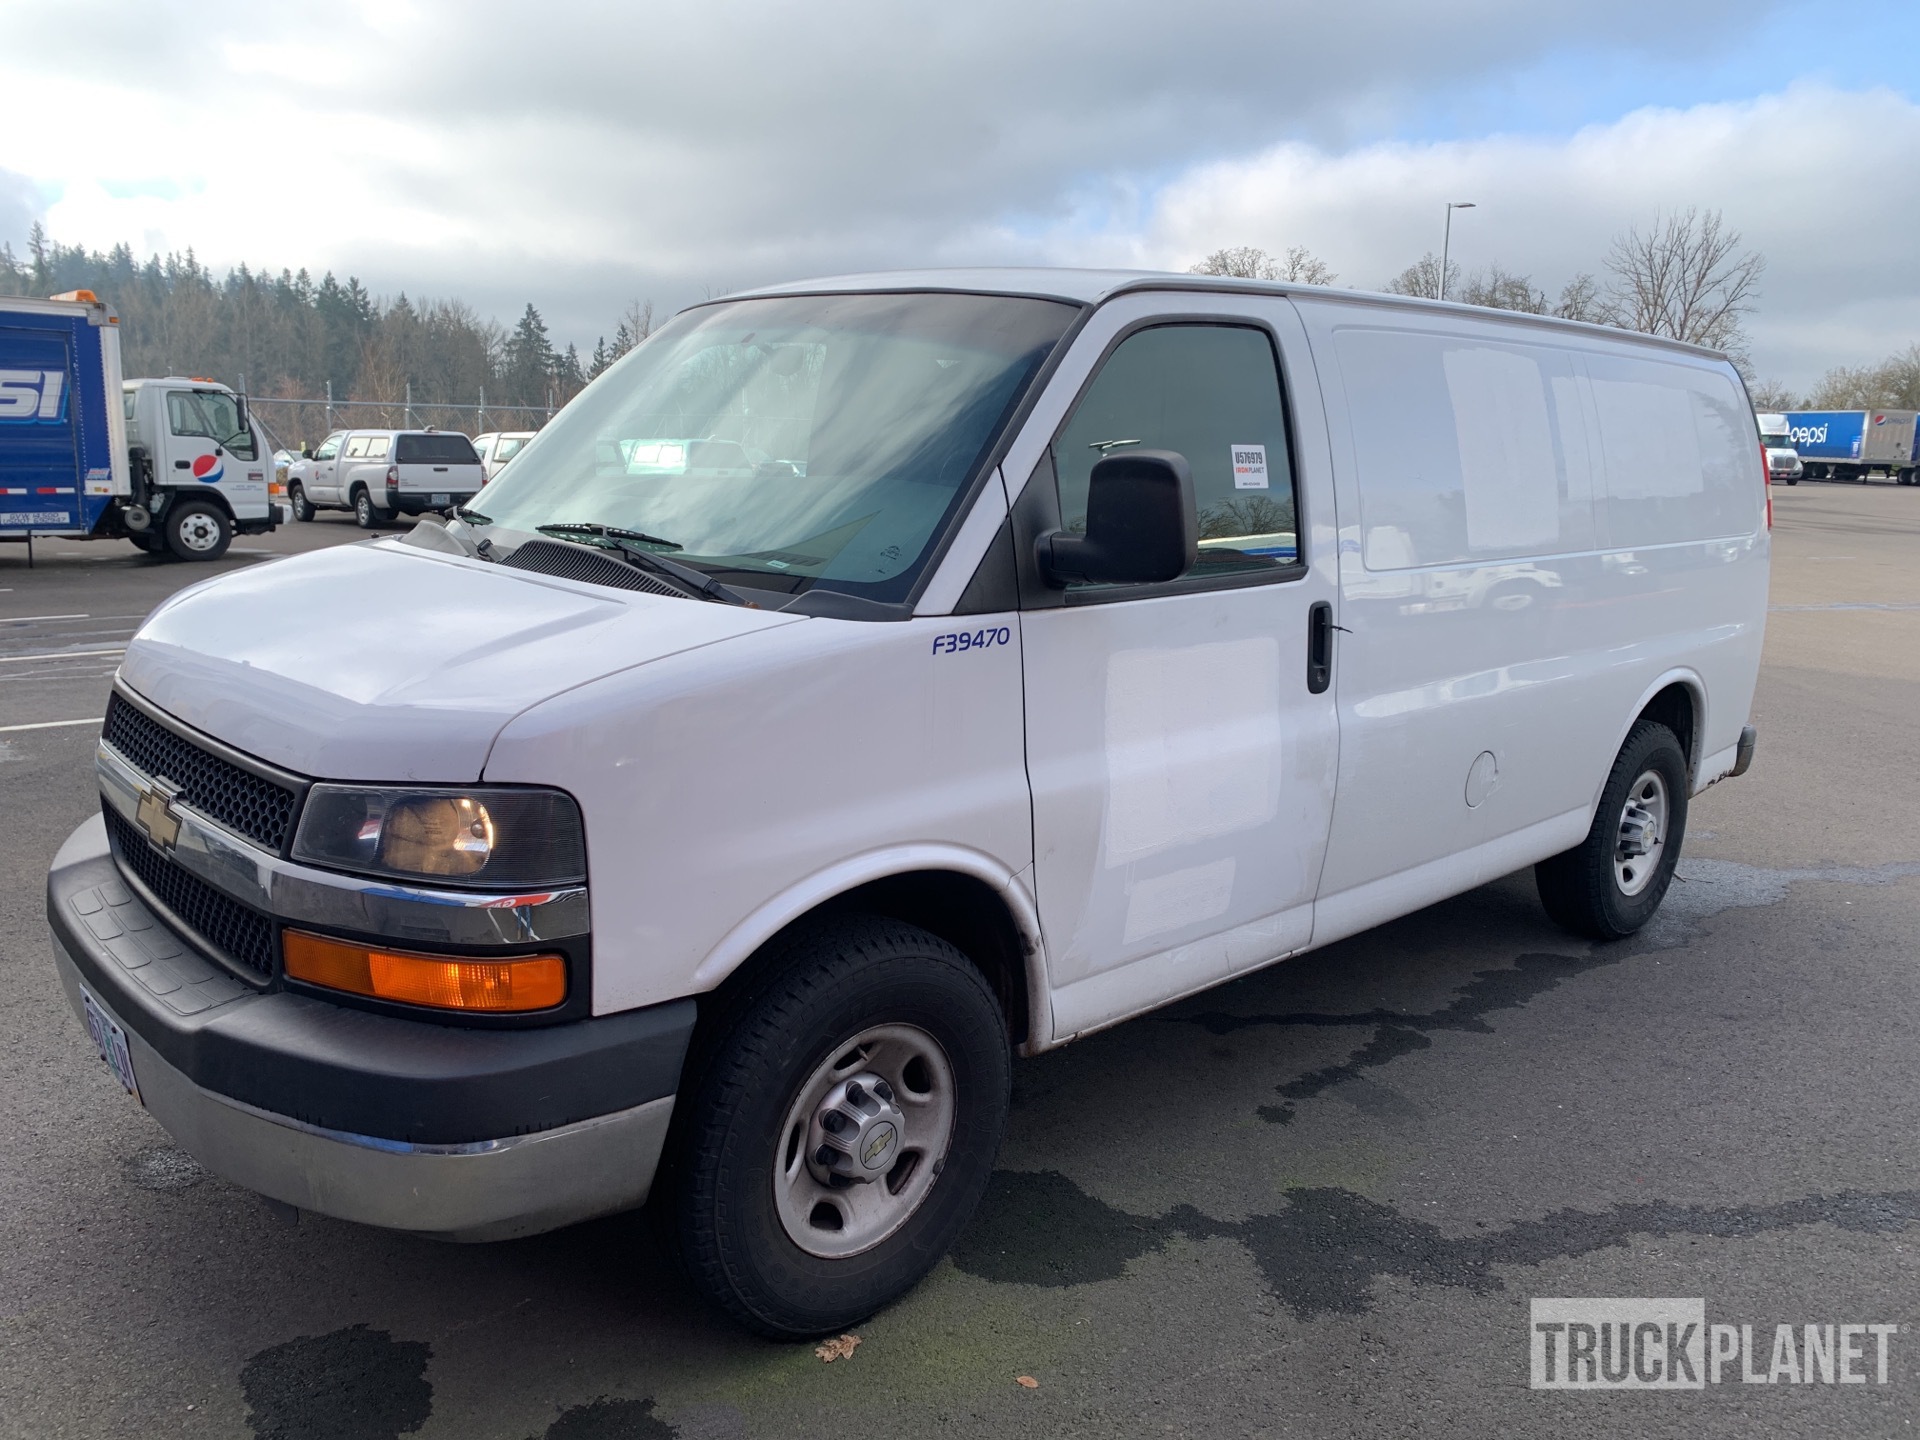 2010 Chevrolet Express 3500 Van in Clackamas, Oregon, United States  (TruckPlanet Item #8761901)